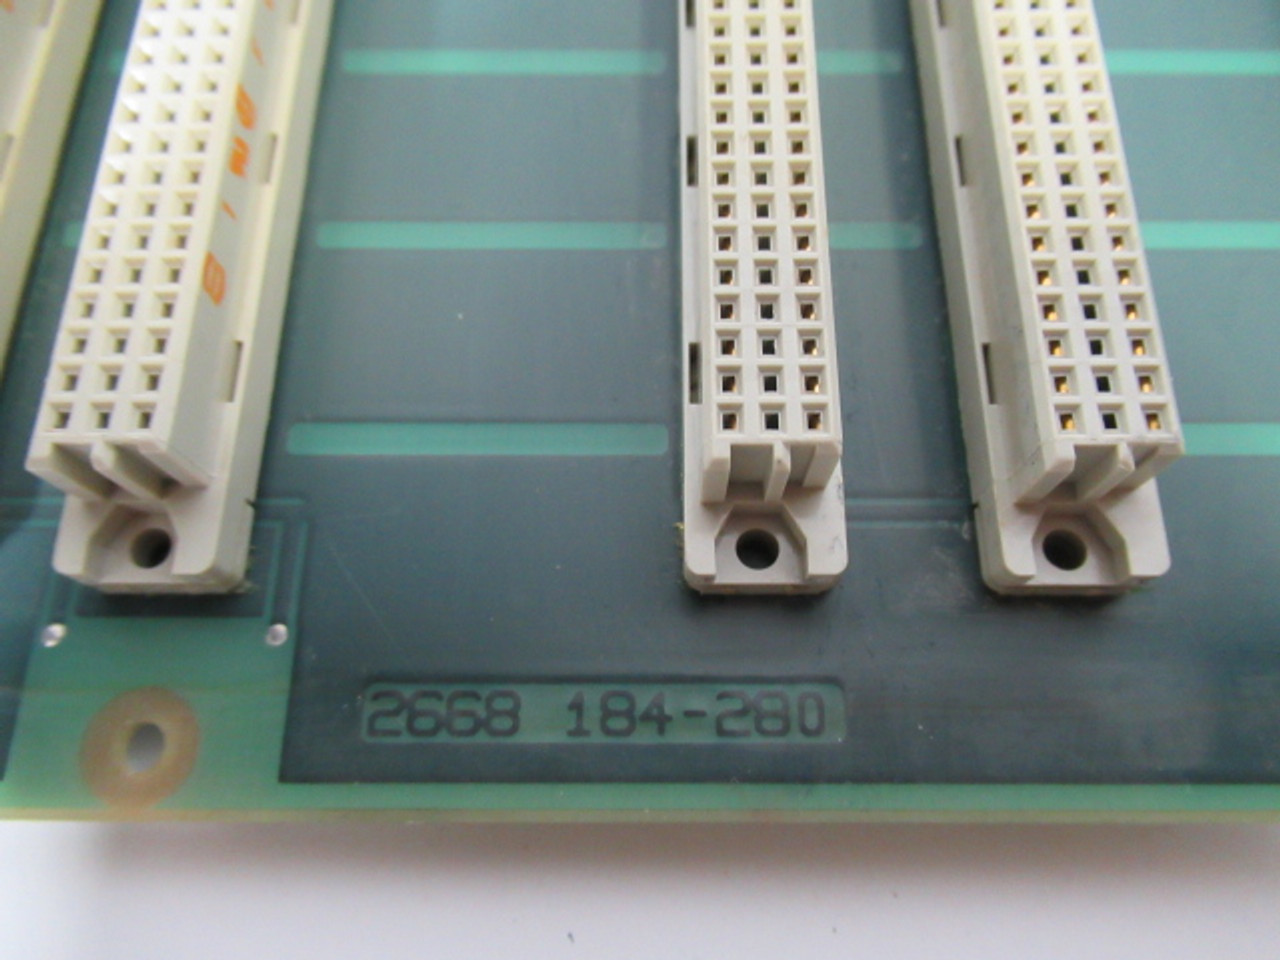 Asea 2668-184-280 12 Slot Control Board USED